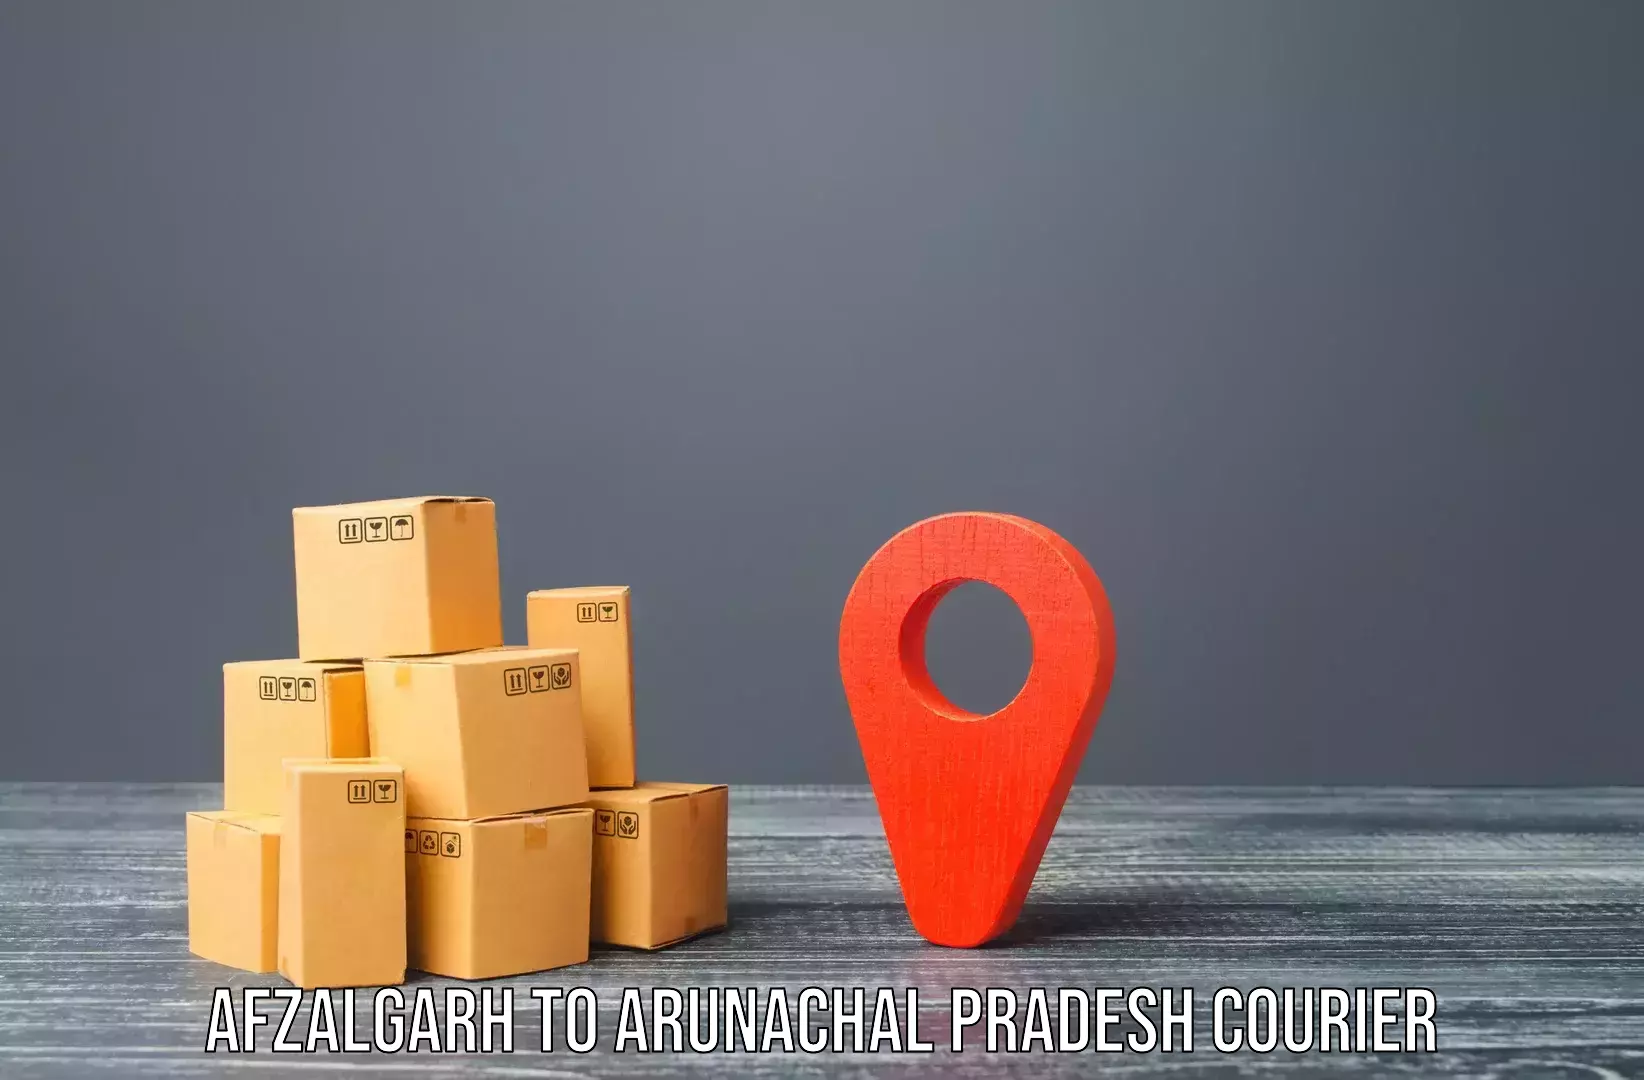 Professional movers and packers Afzalgarh to Lower Subansiri